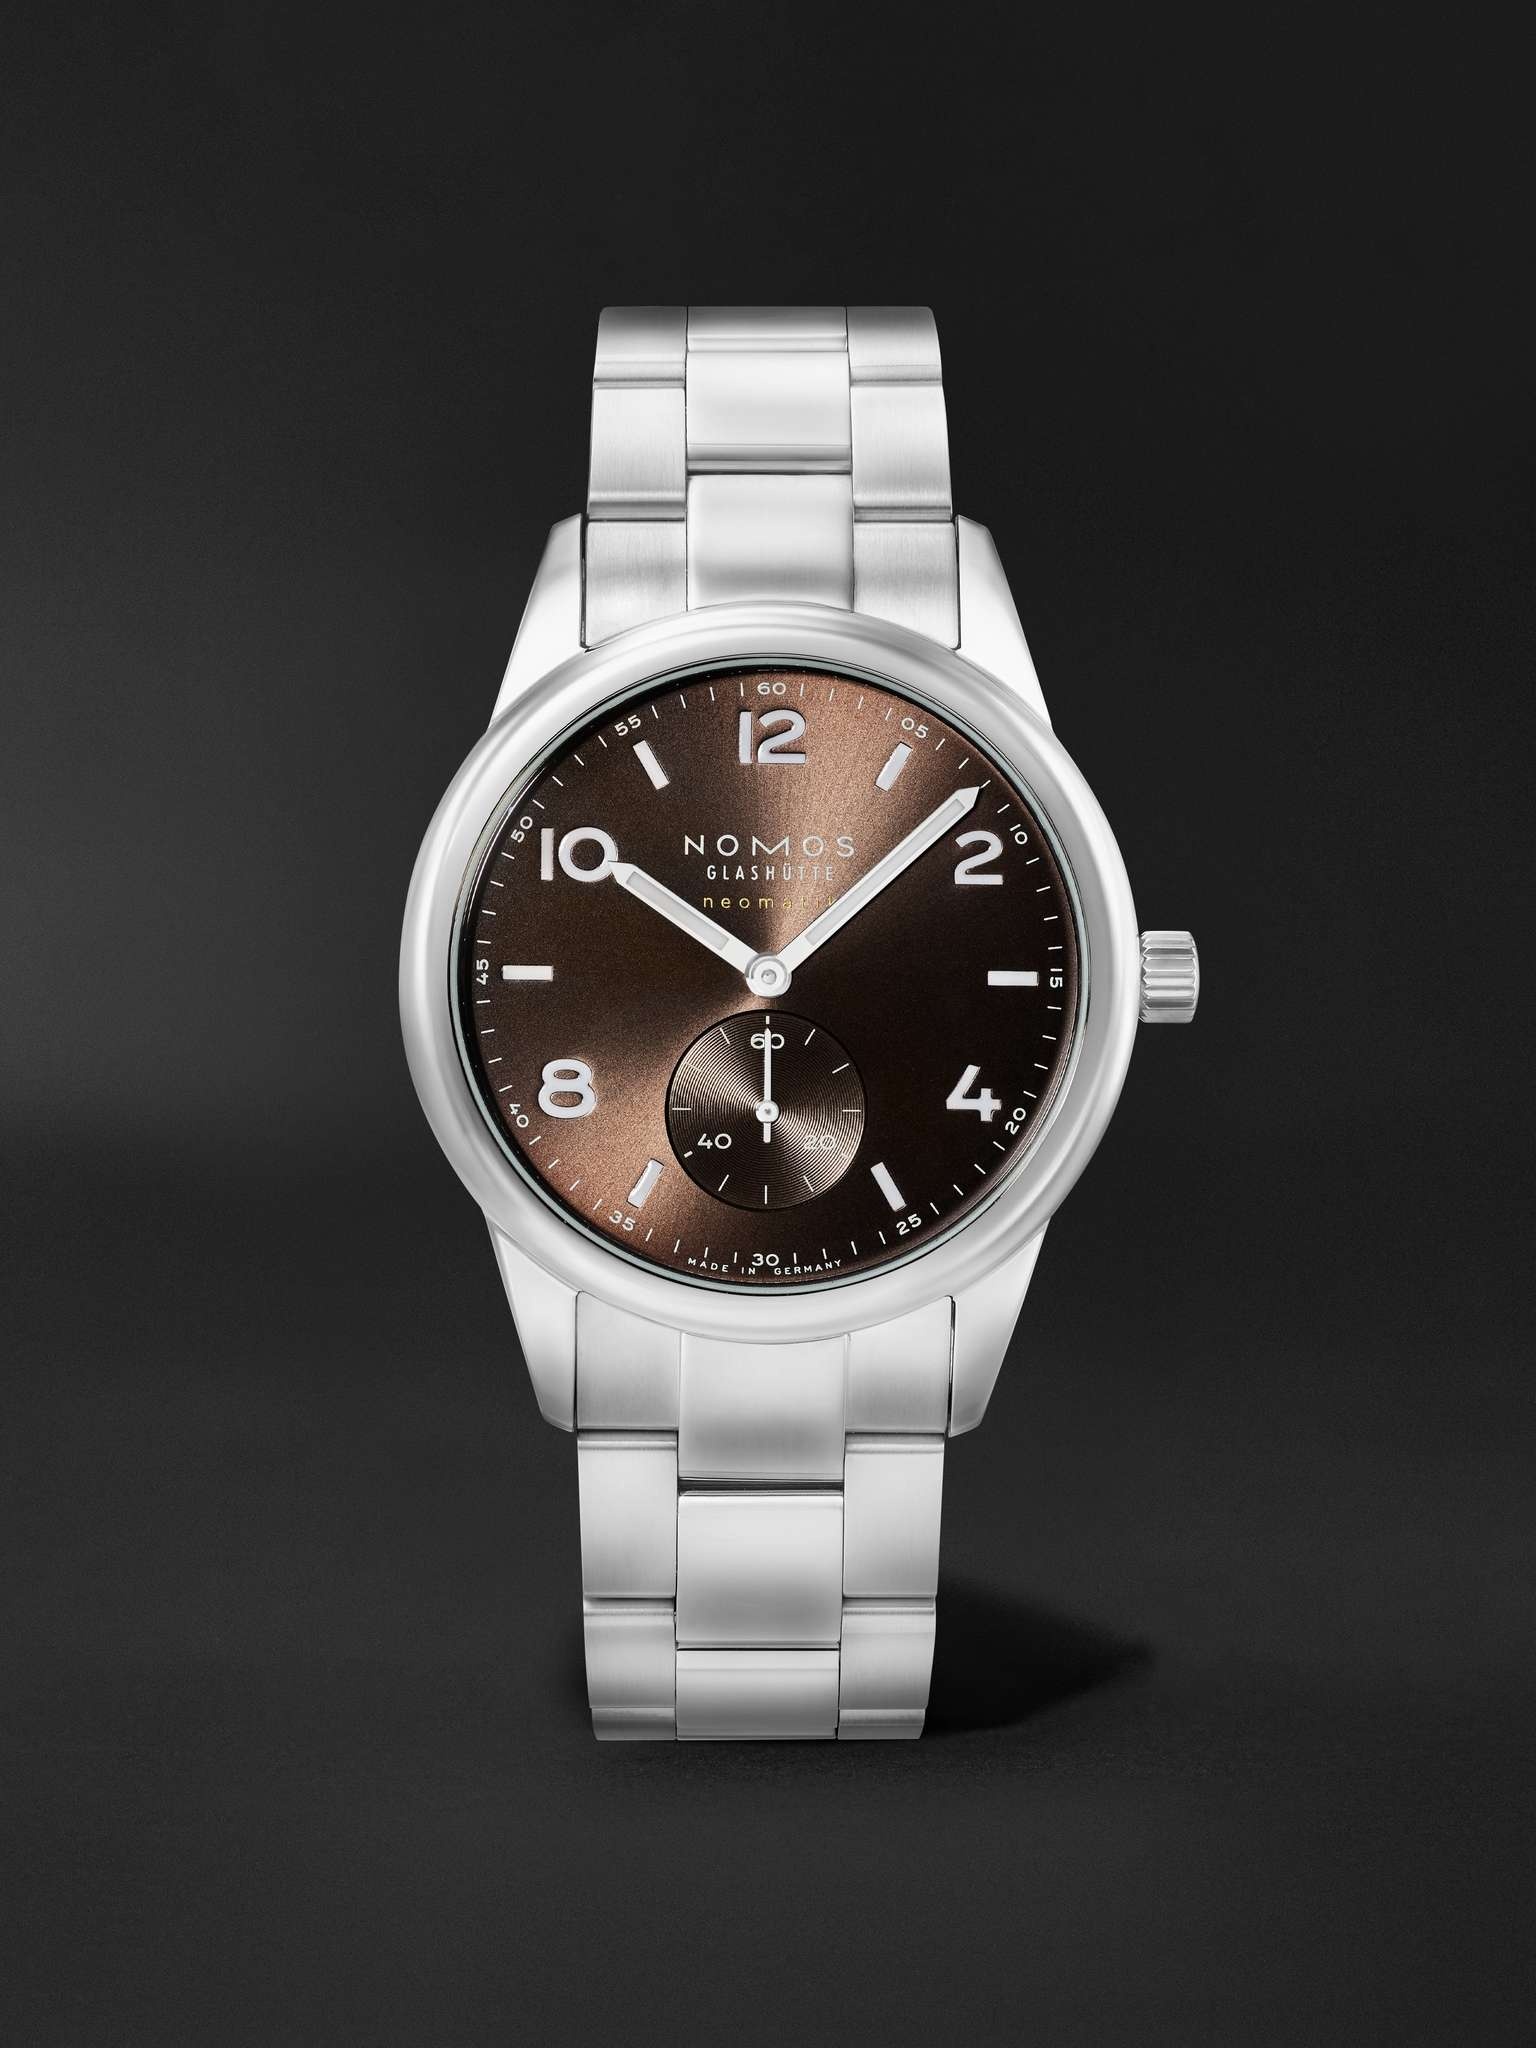 Club Sport Neomatik Automatic 39.5mm Stainless Steel Watch, Ref. No. 760 - 1